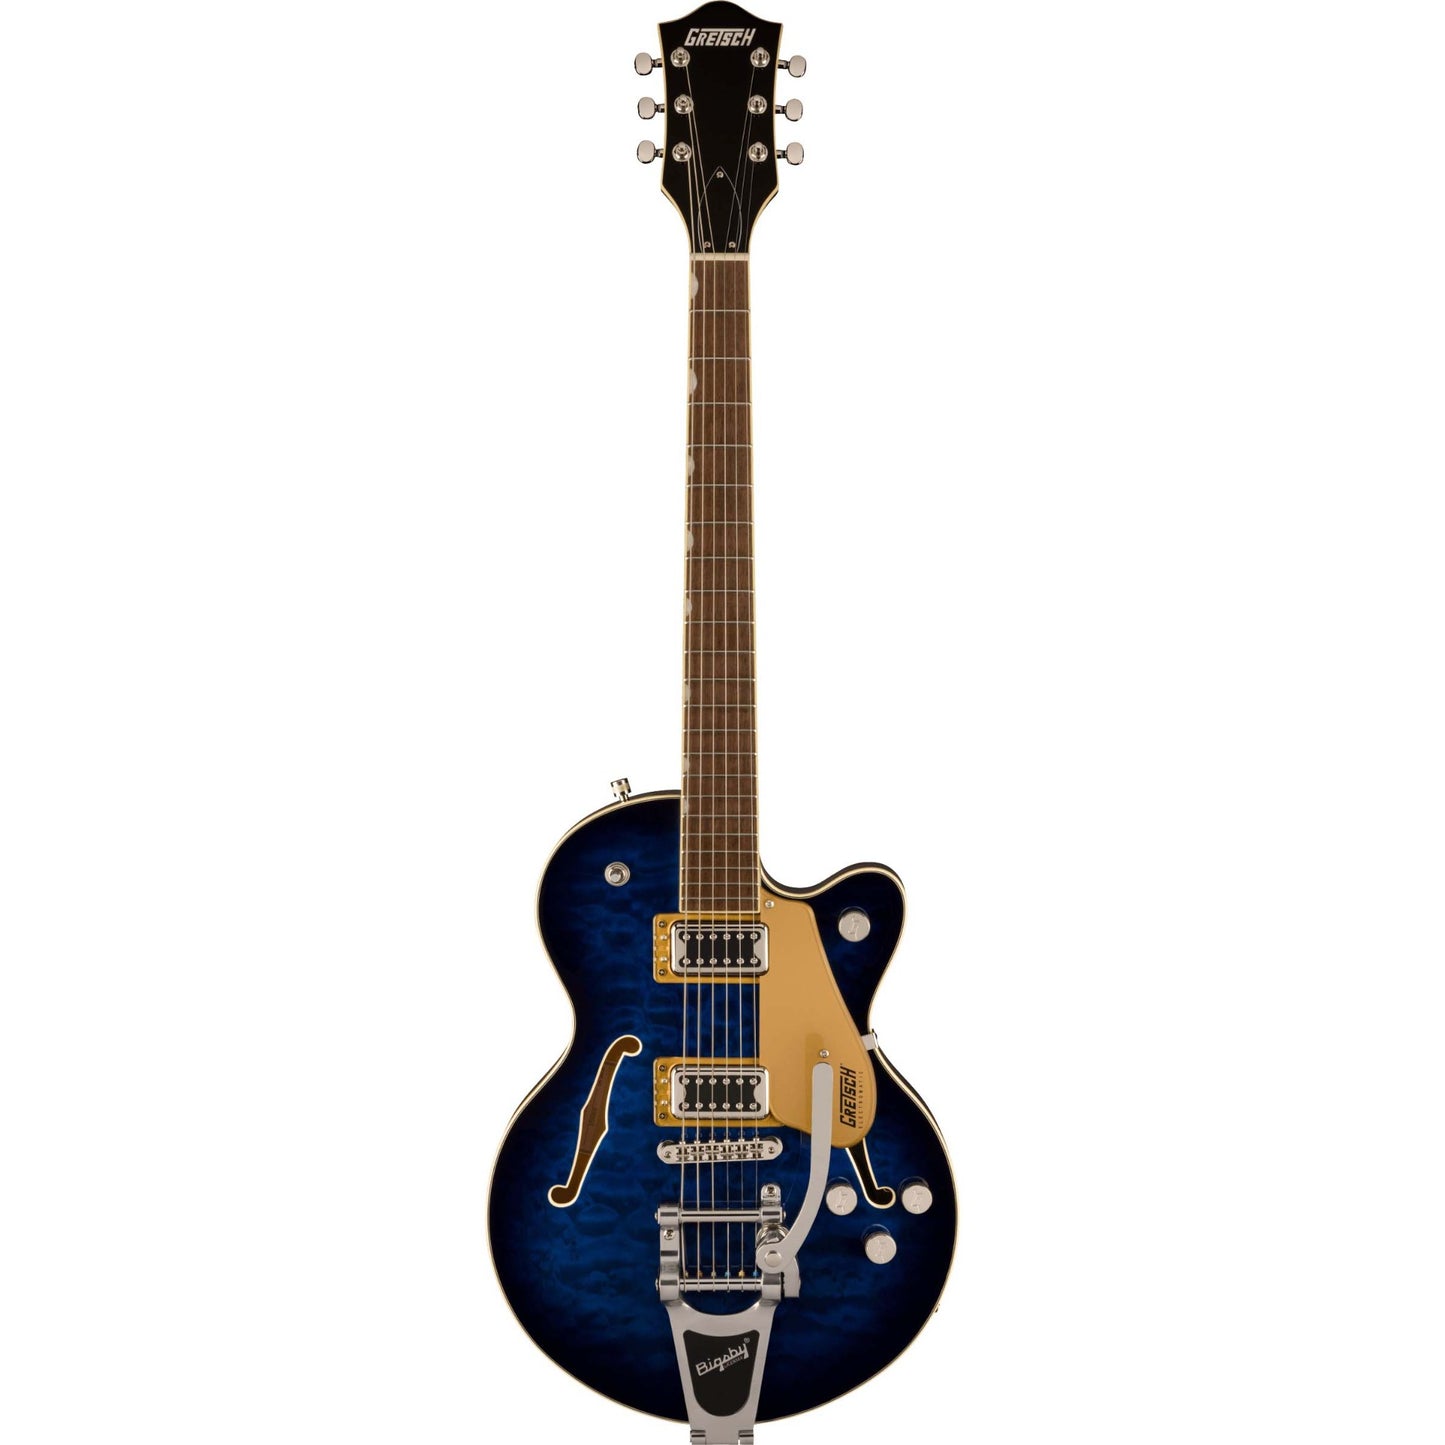 Gretsch G5655T-QM Electromatic Center Block Jr. Electric Guitar in Hudson Sky